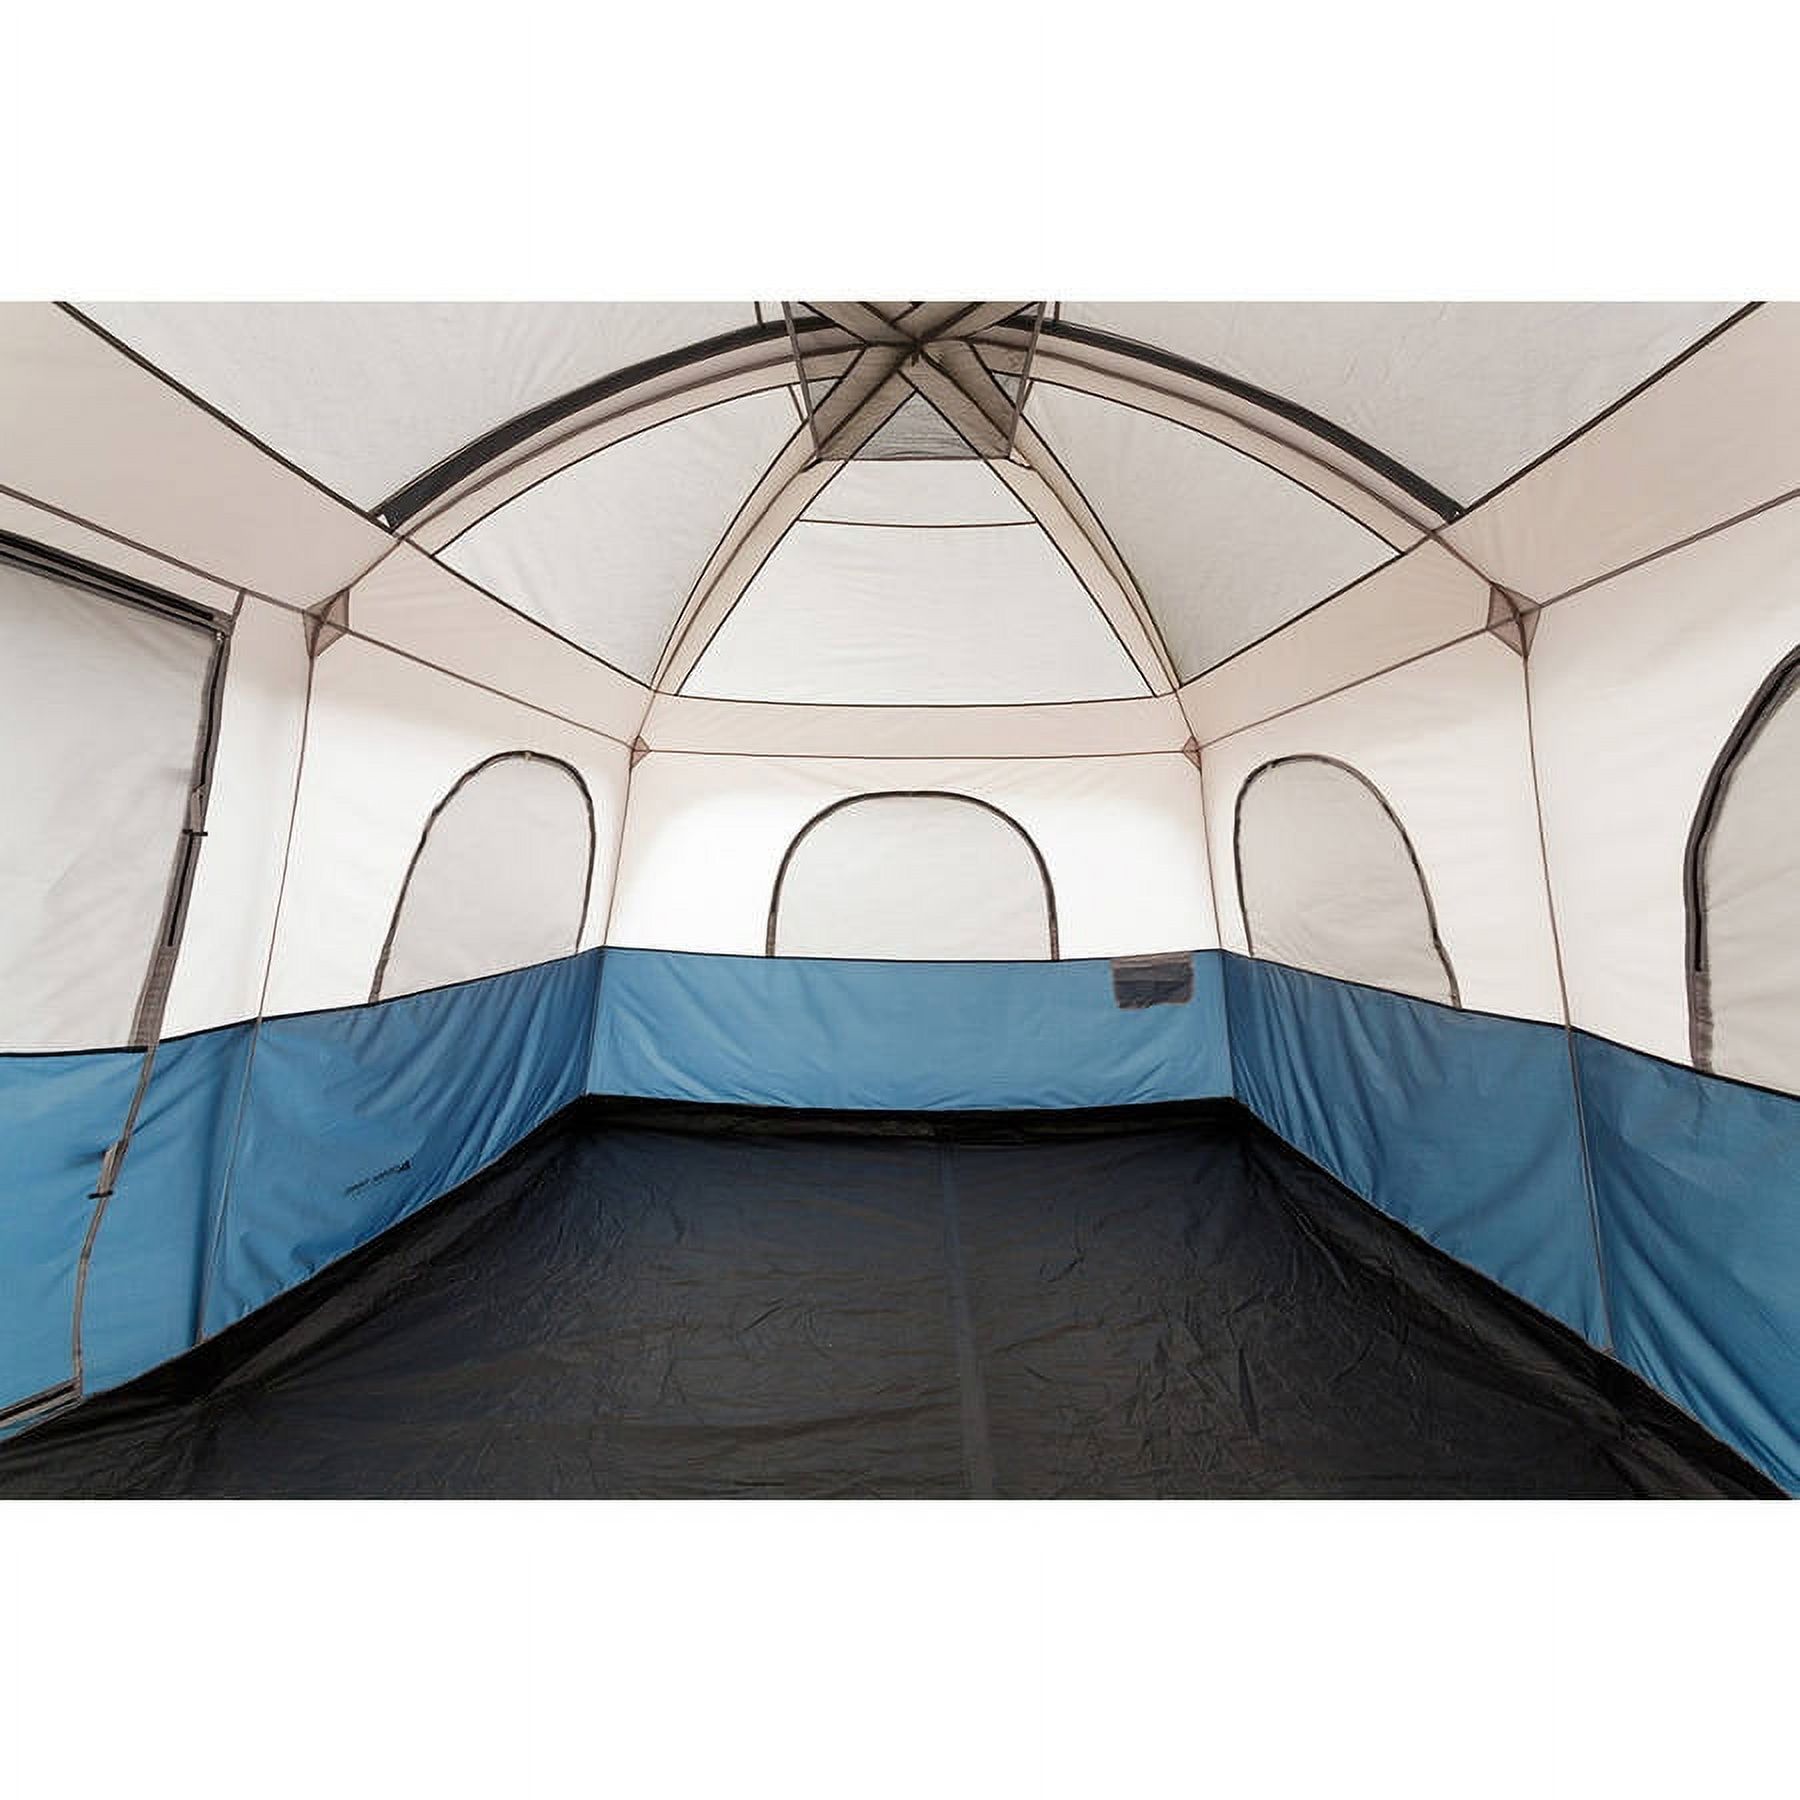 Ozark Trail 14' x 10' Family Cabin Tent, Sleeps 10, 13.5 lbs - image 3 of 6